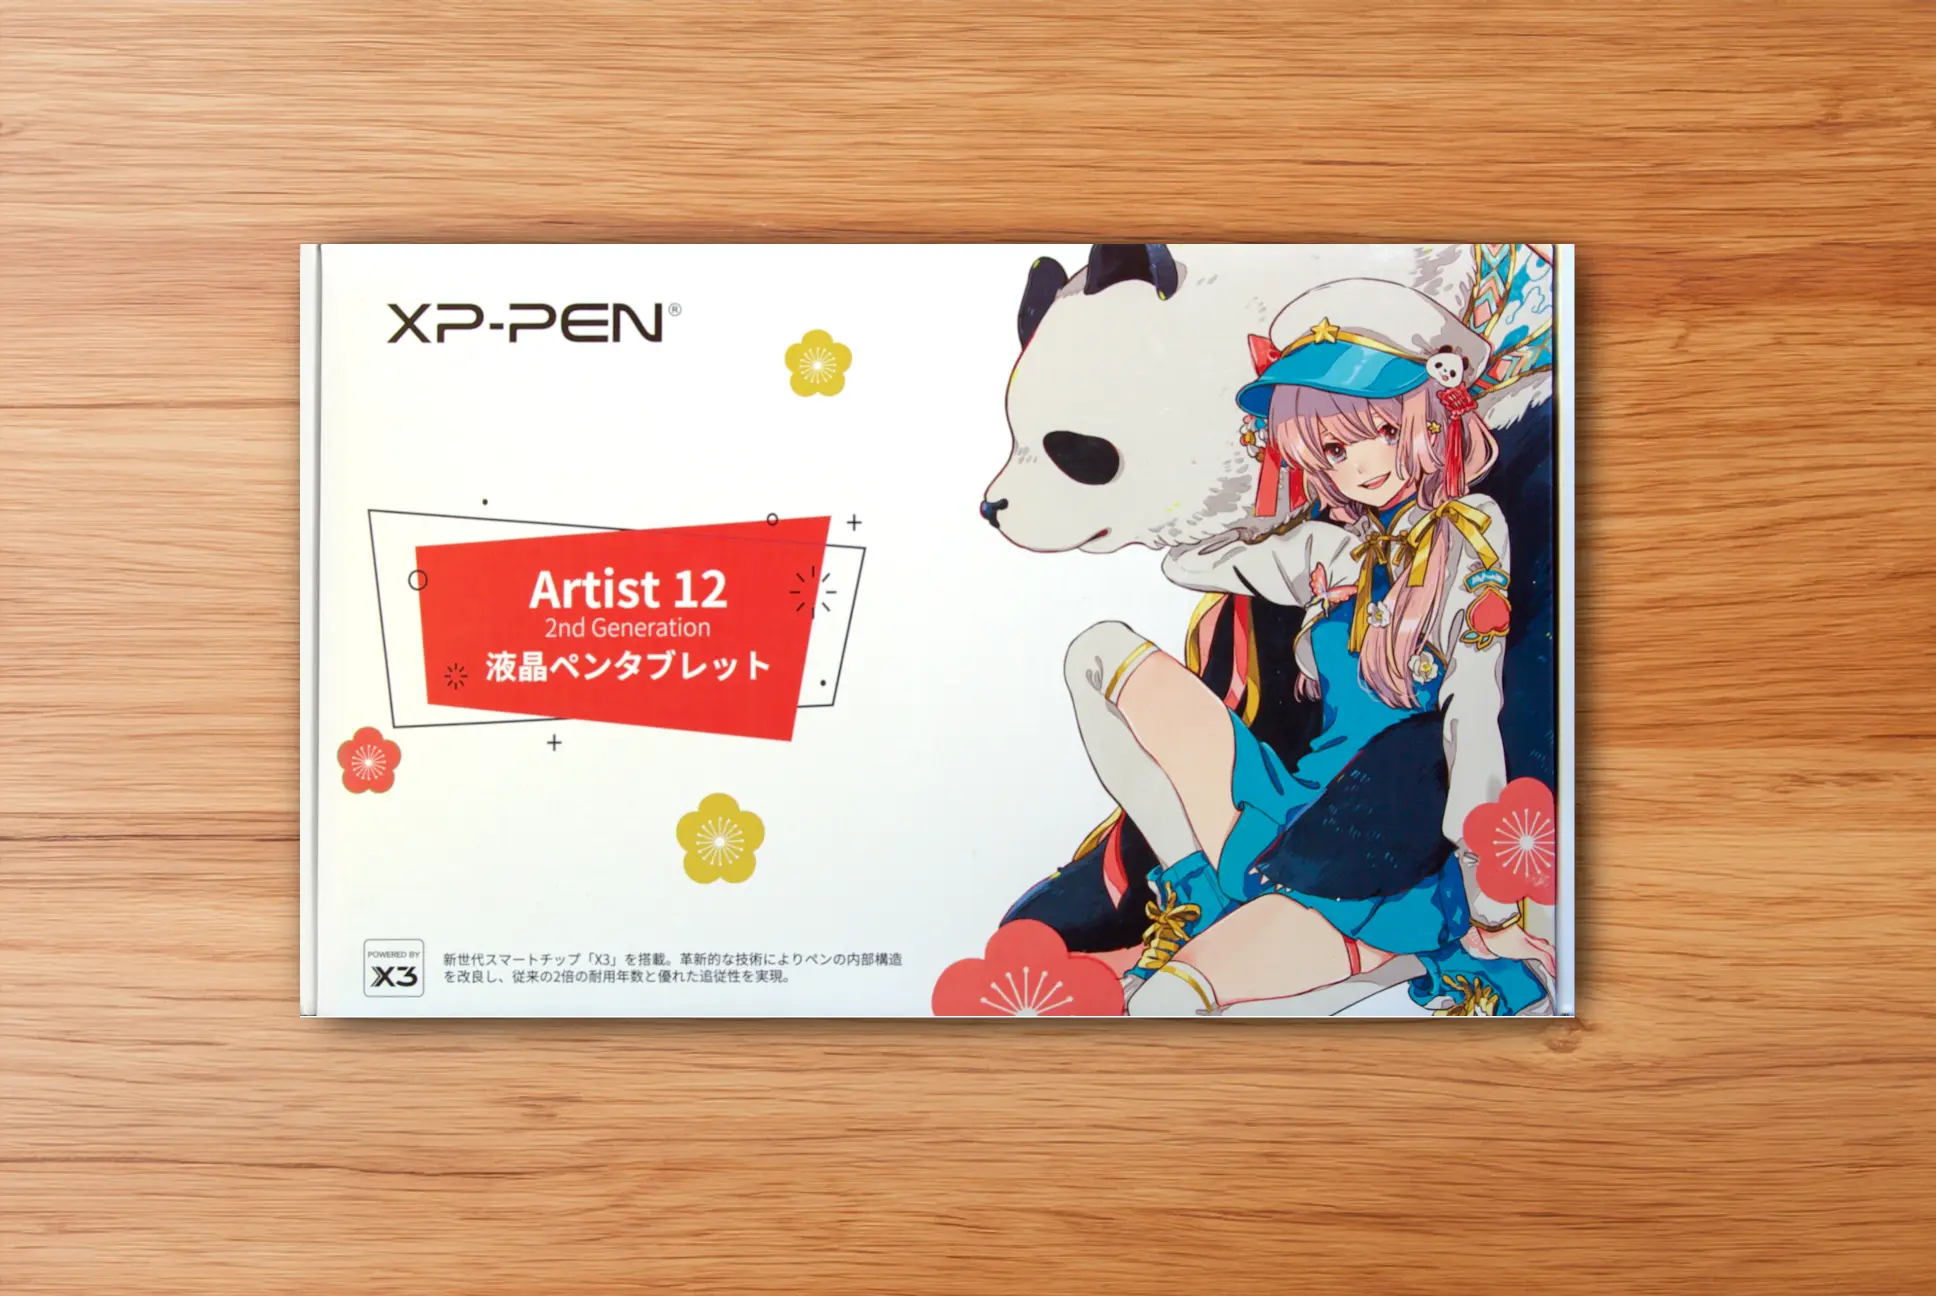 XP-PEN Artist 12セカンド豪華版の実機を現役デザイナーが実際に徹底検証した記事 - XP-PEN Artist 12セカンド豪華版のパッケージ画像